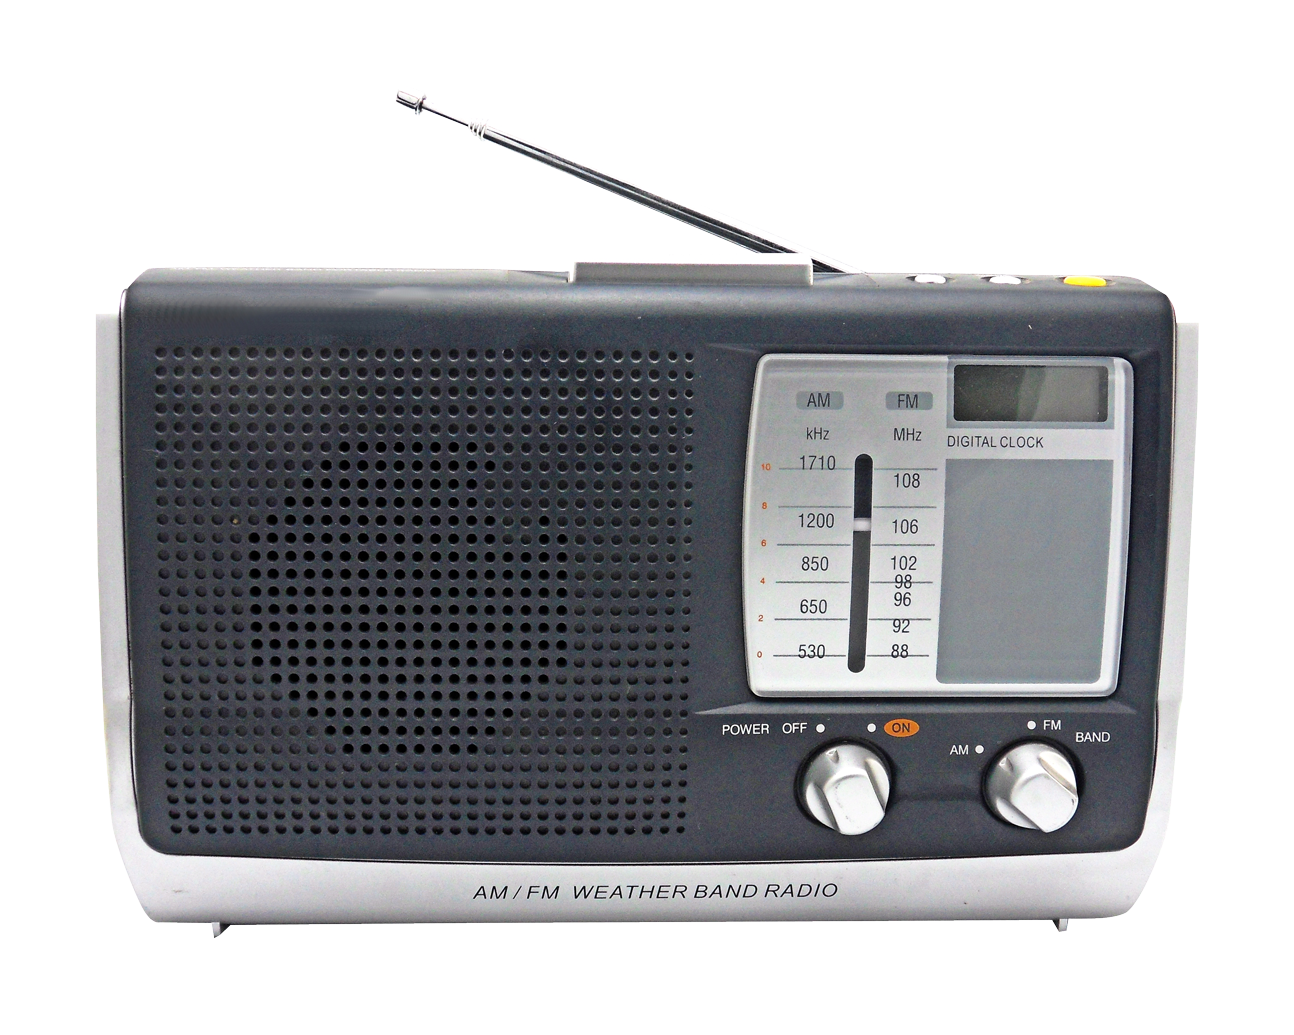 national radio day radio vintage retro analog png download - 4096